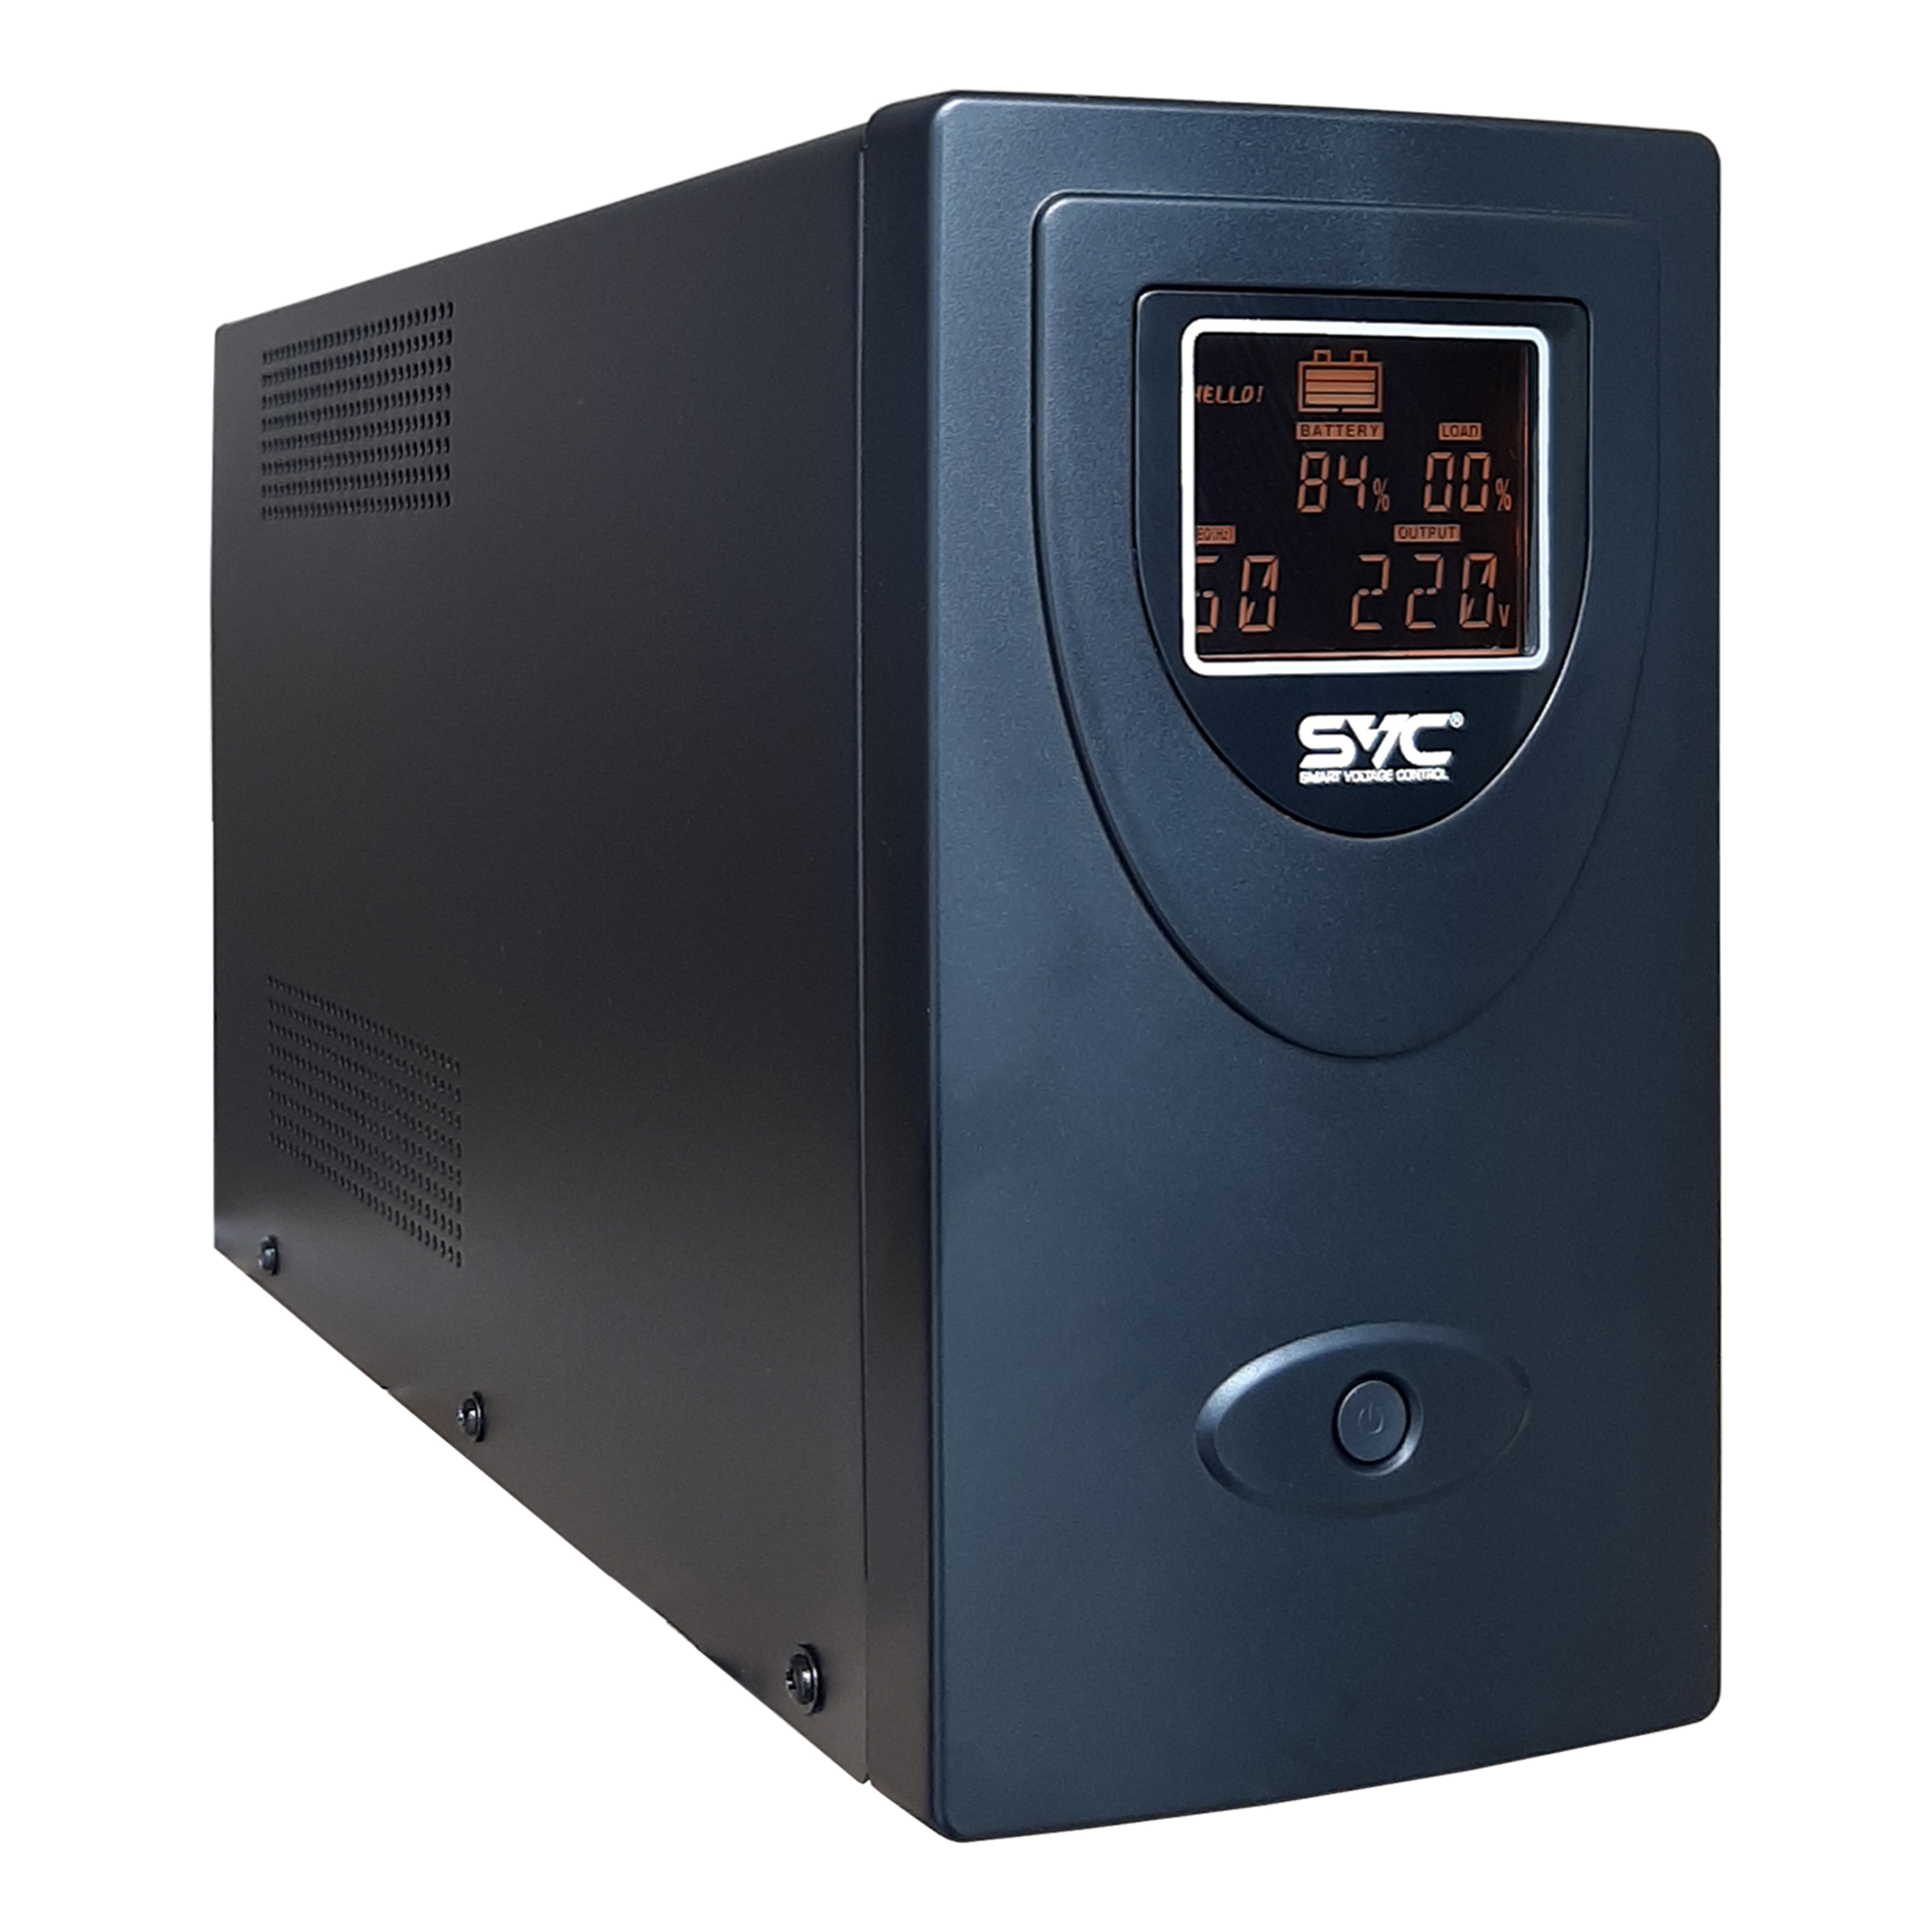 ИБП SVC V-2000-R-LCD, 2000VA, 1200W, EURO, розеток - 2, USB, черный (V-2000-R-LCD)